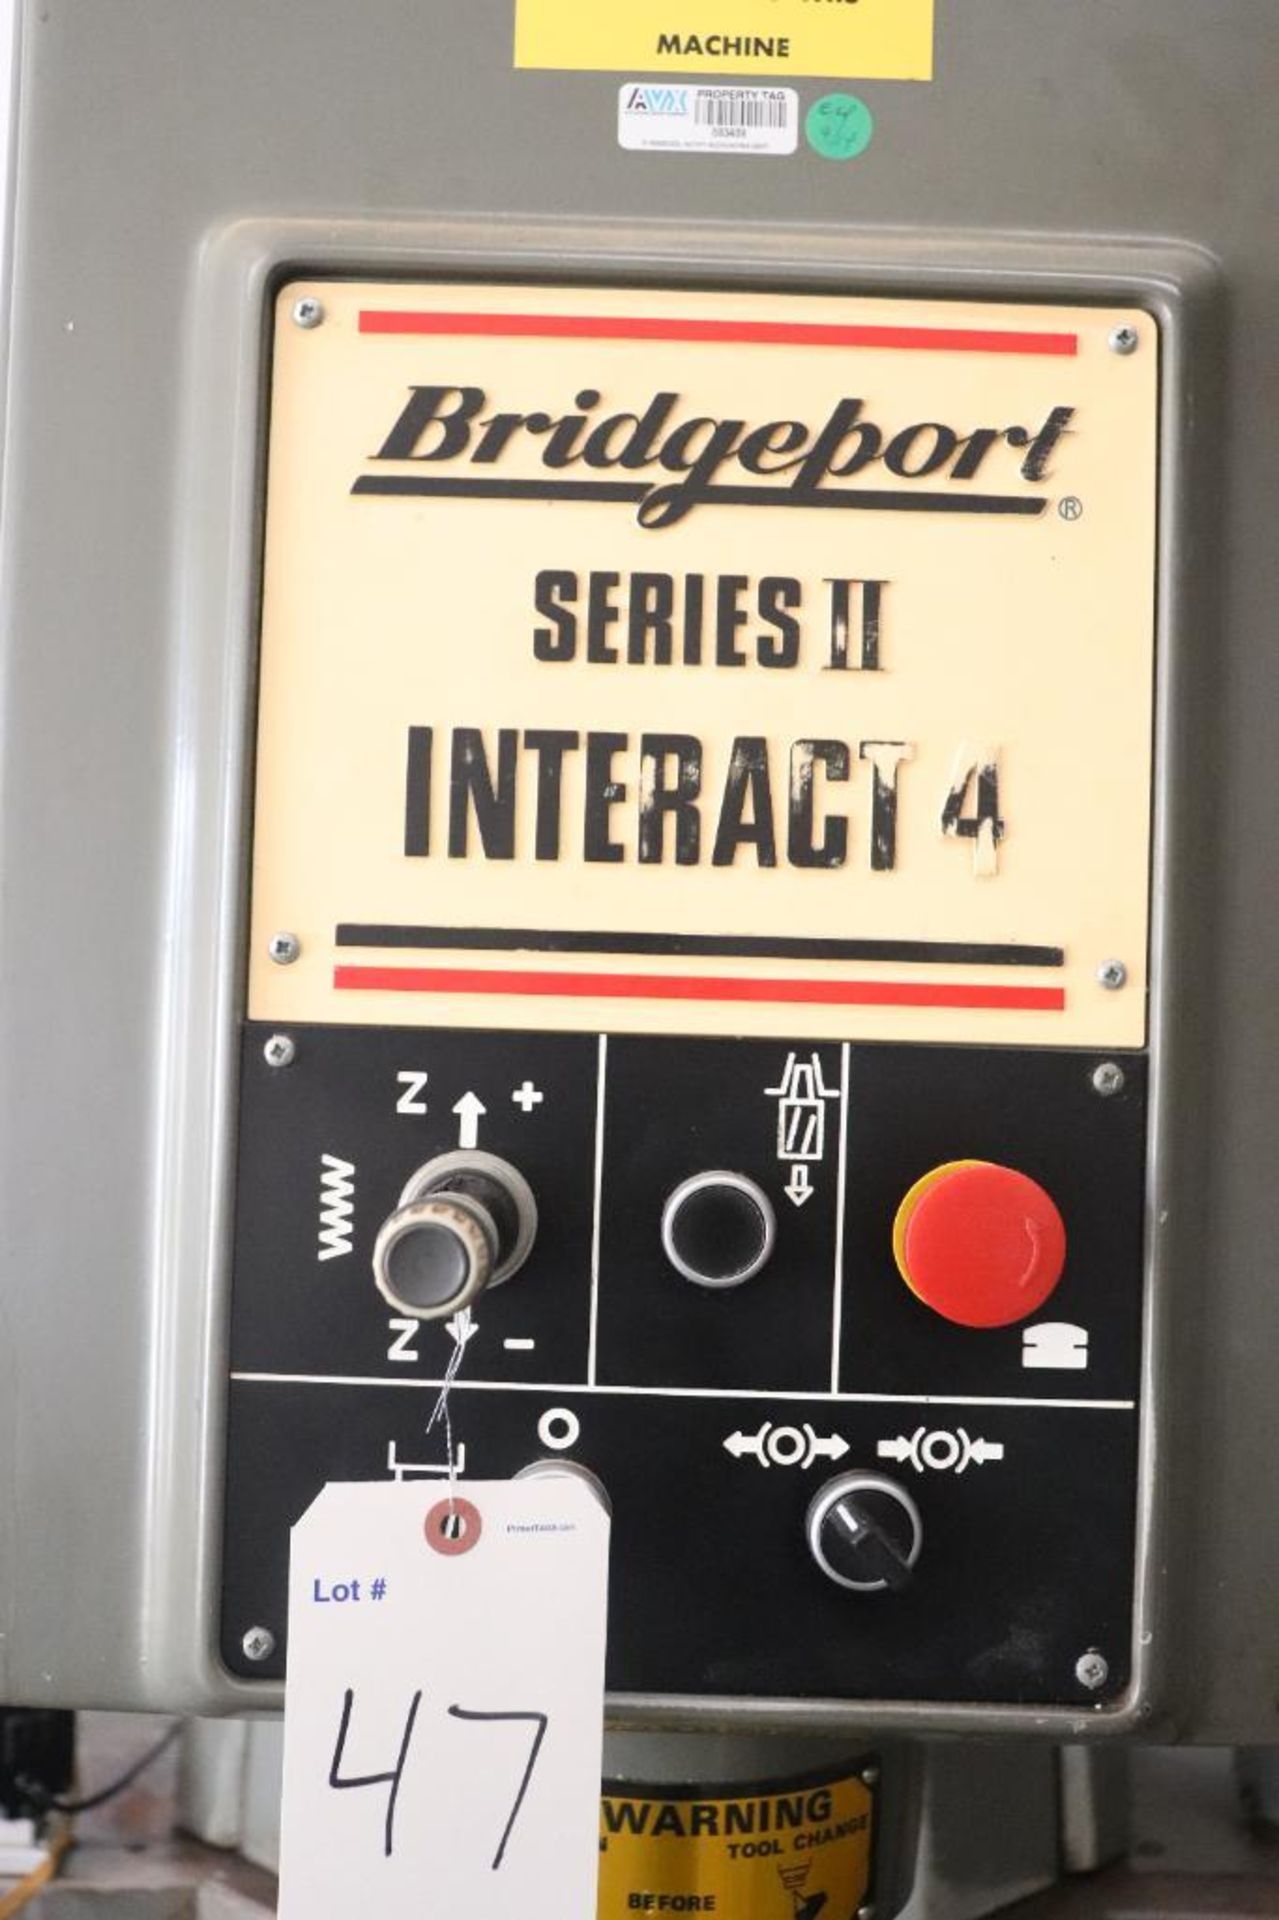 Bridgeport Series II Interact 4 CNC Milling Machine - Image 7 of 15